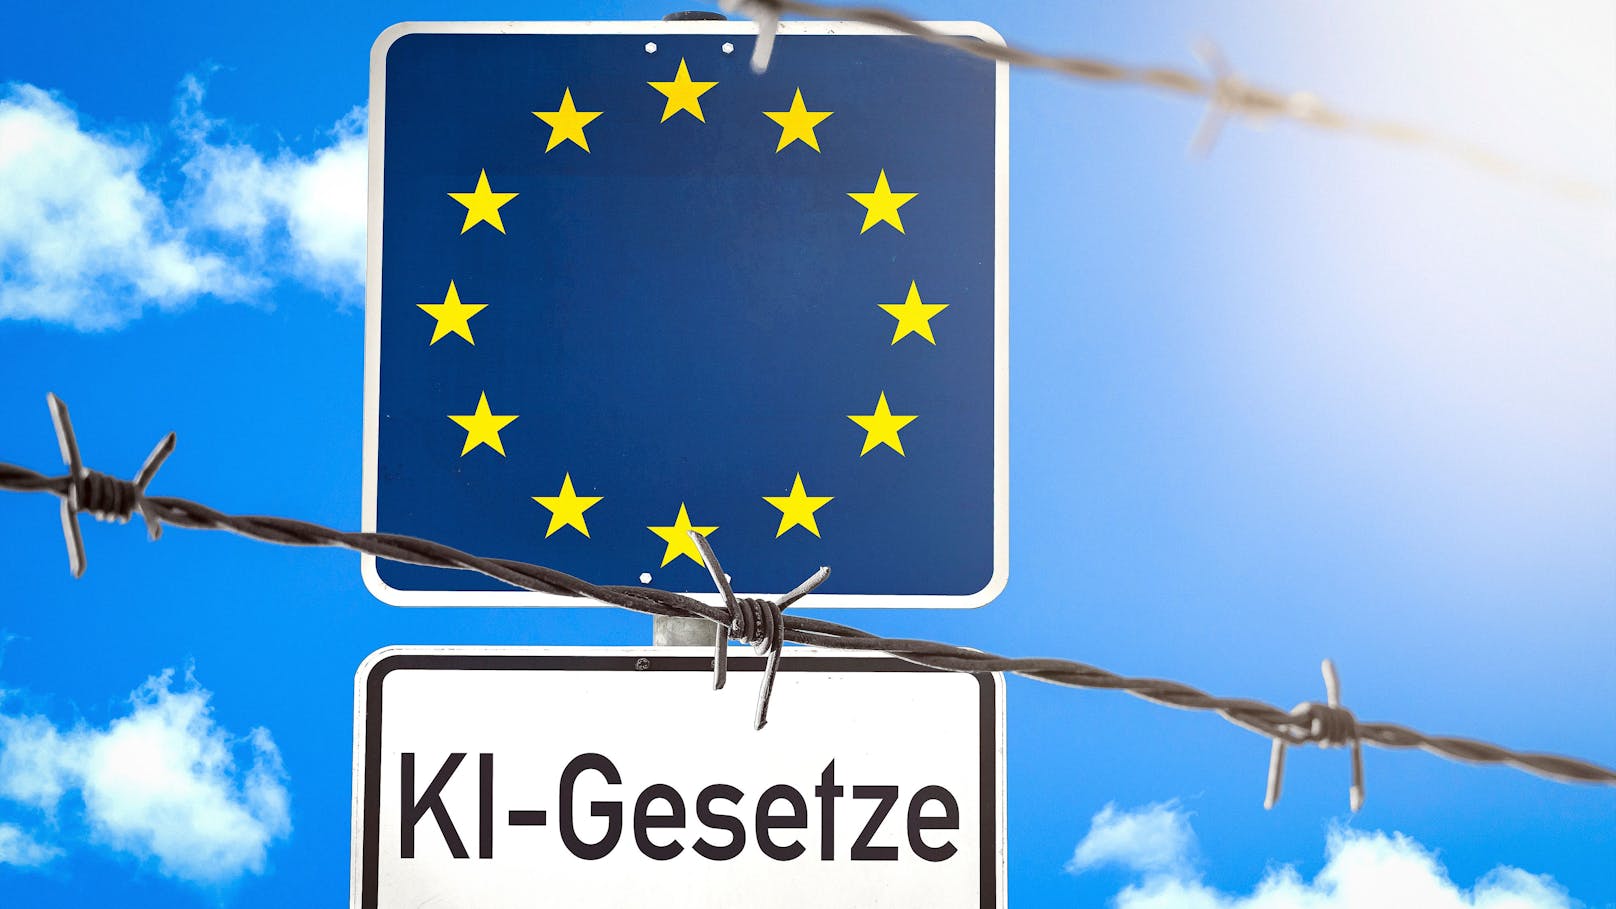 KI-Gesetz: EU verbietet Massenüberwachung wie in China